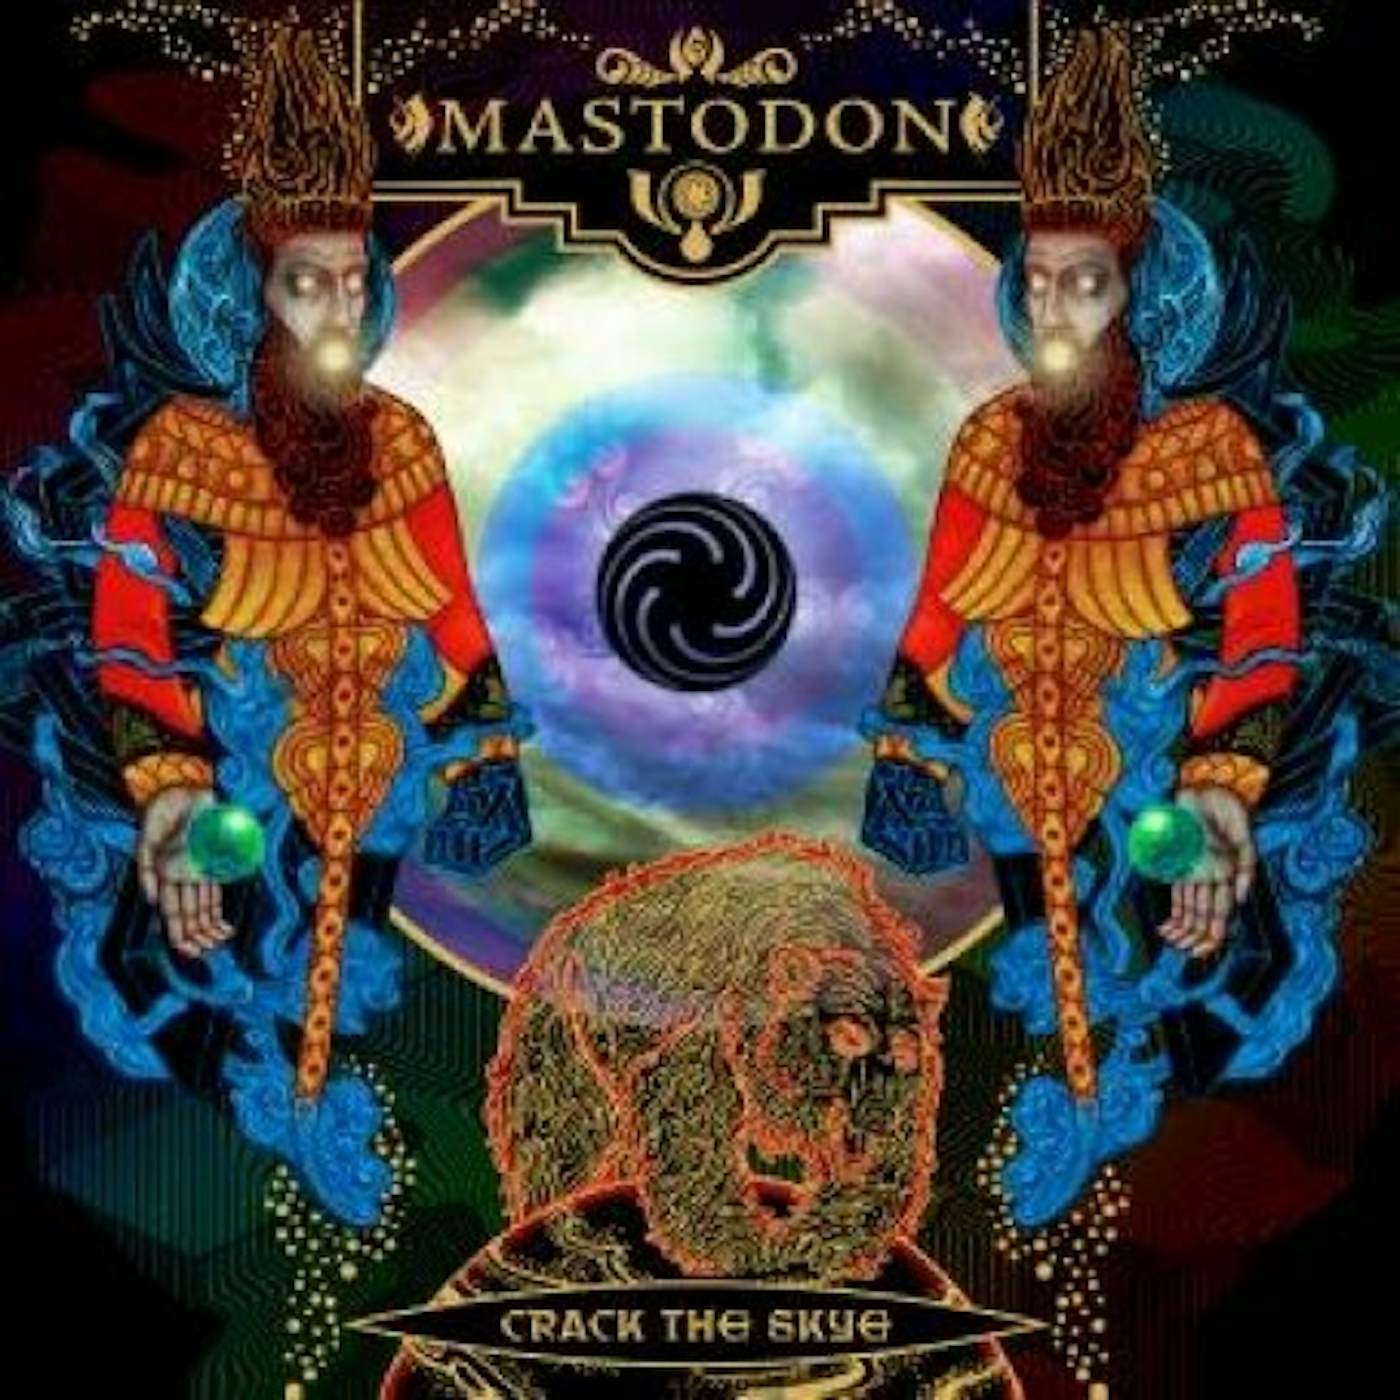 Mastodon CRACK THE SKYE CD